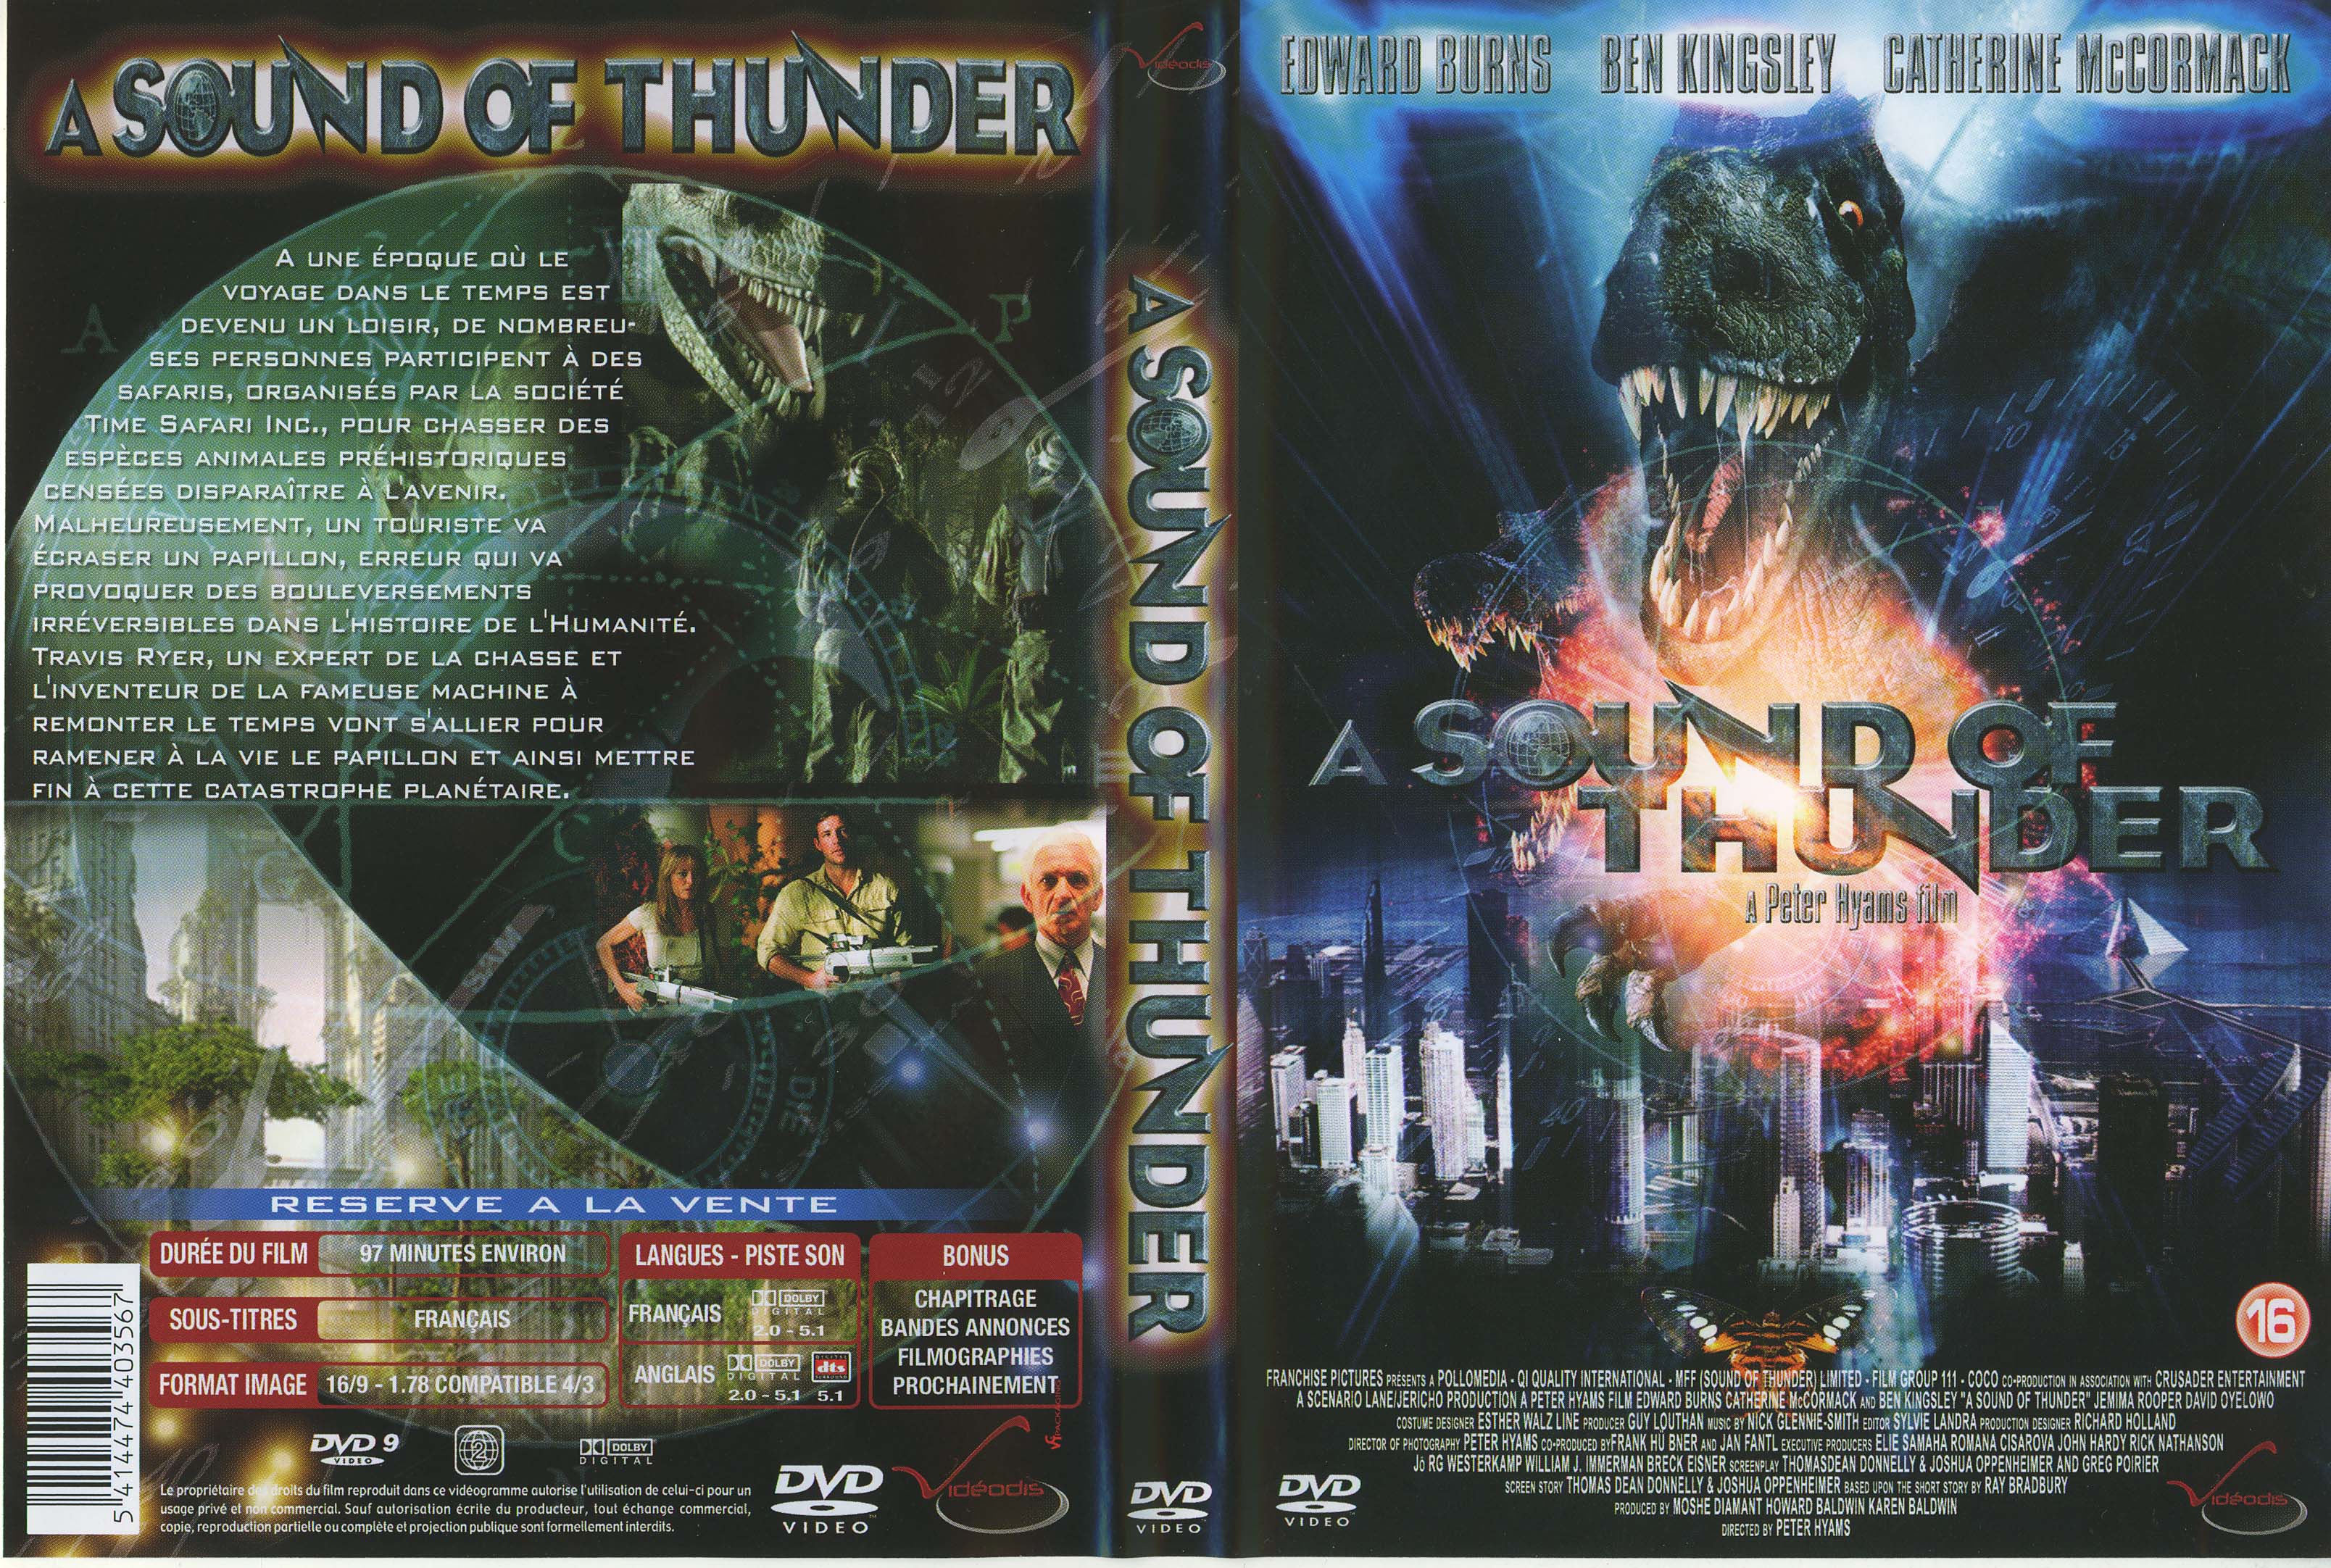 Jaquette DVD A sound of thunder v3